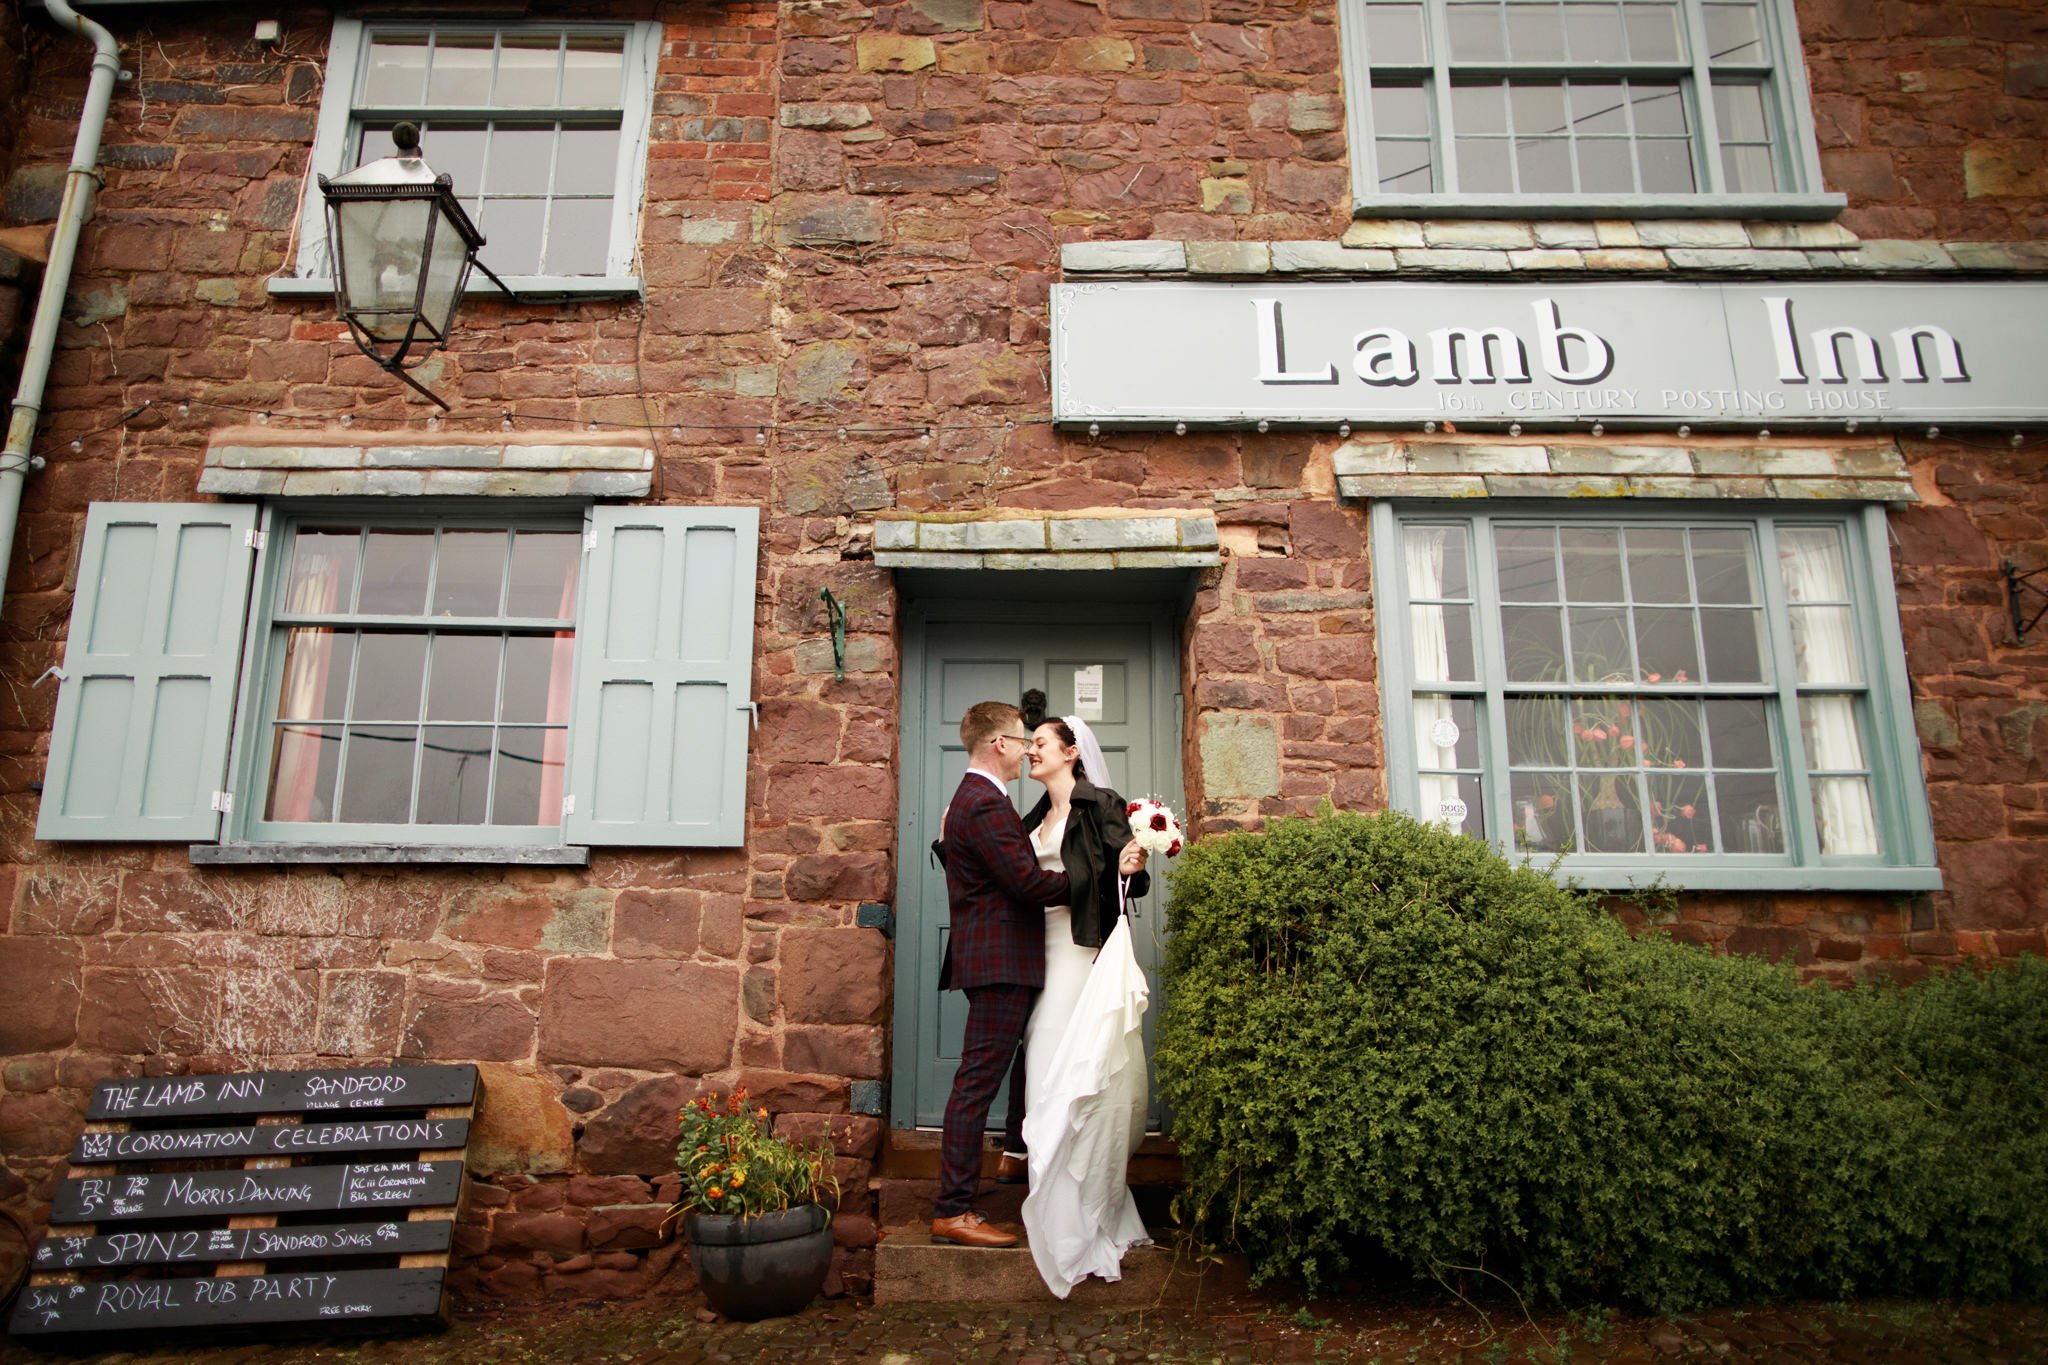 The Lamb Inn Sandford Wedding Photographer - 023.jpg